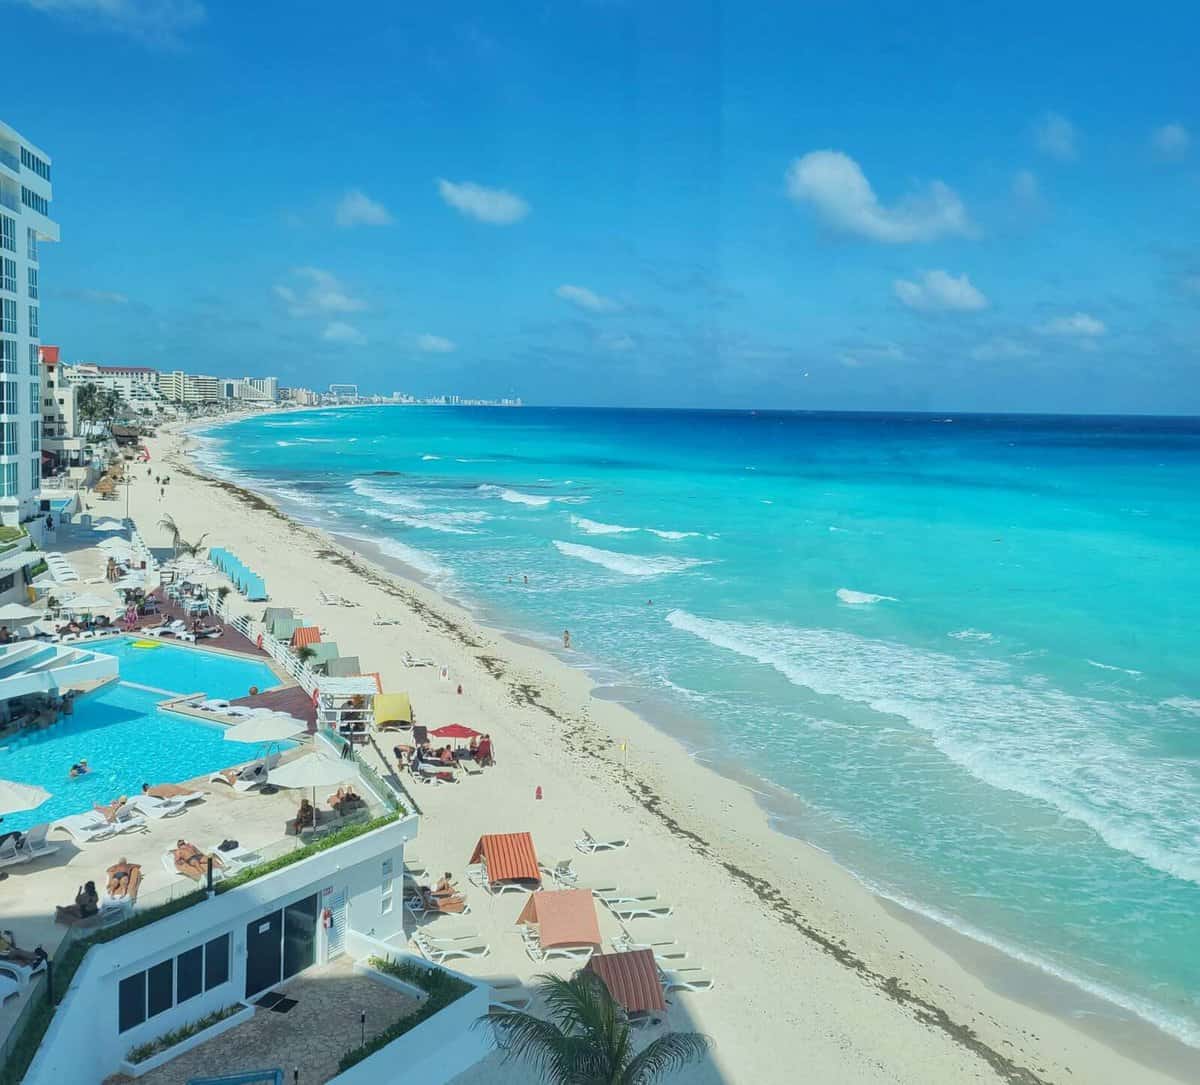 Cancun vs playa del carmen - which is better?